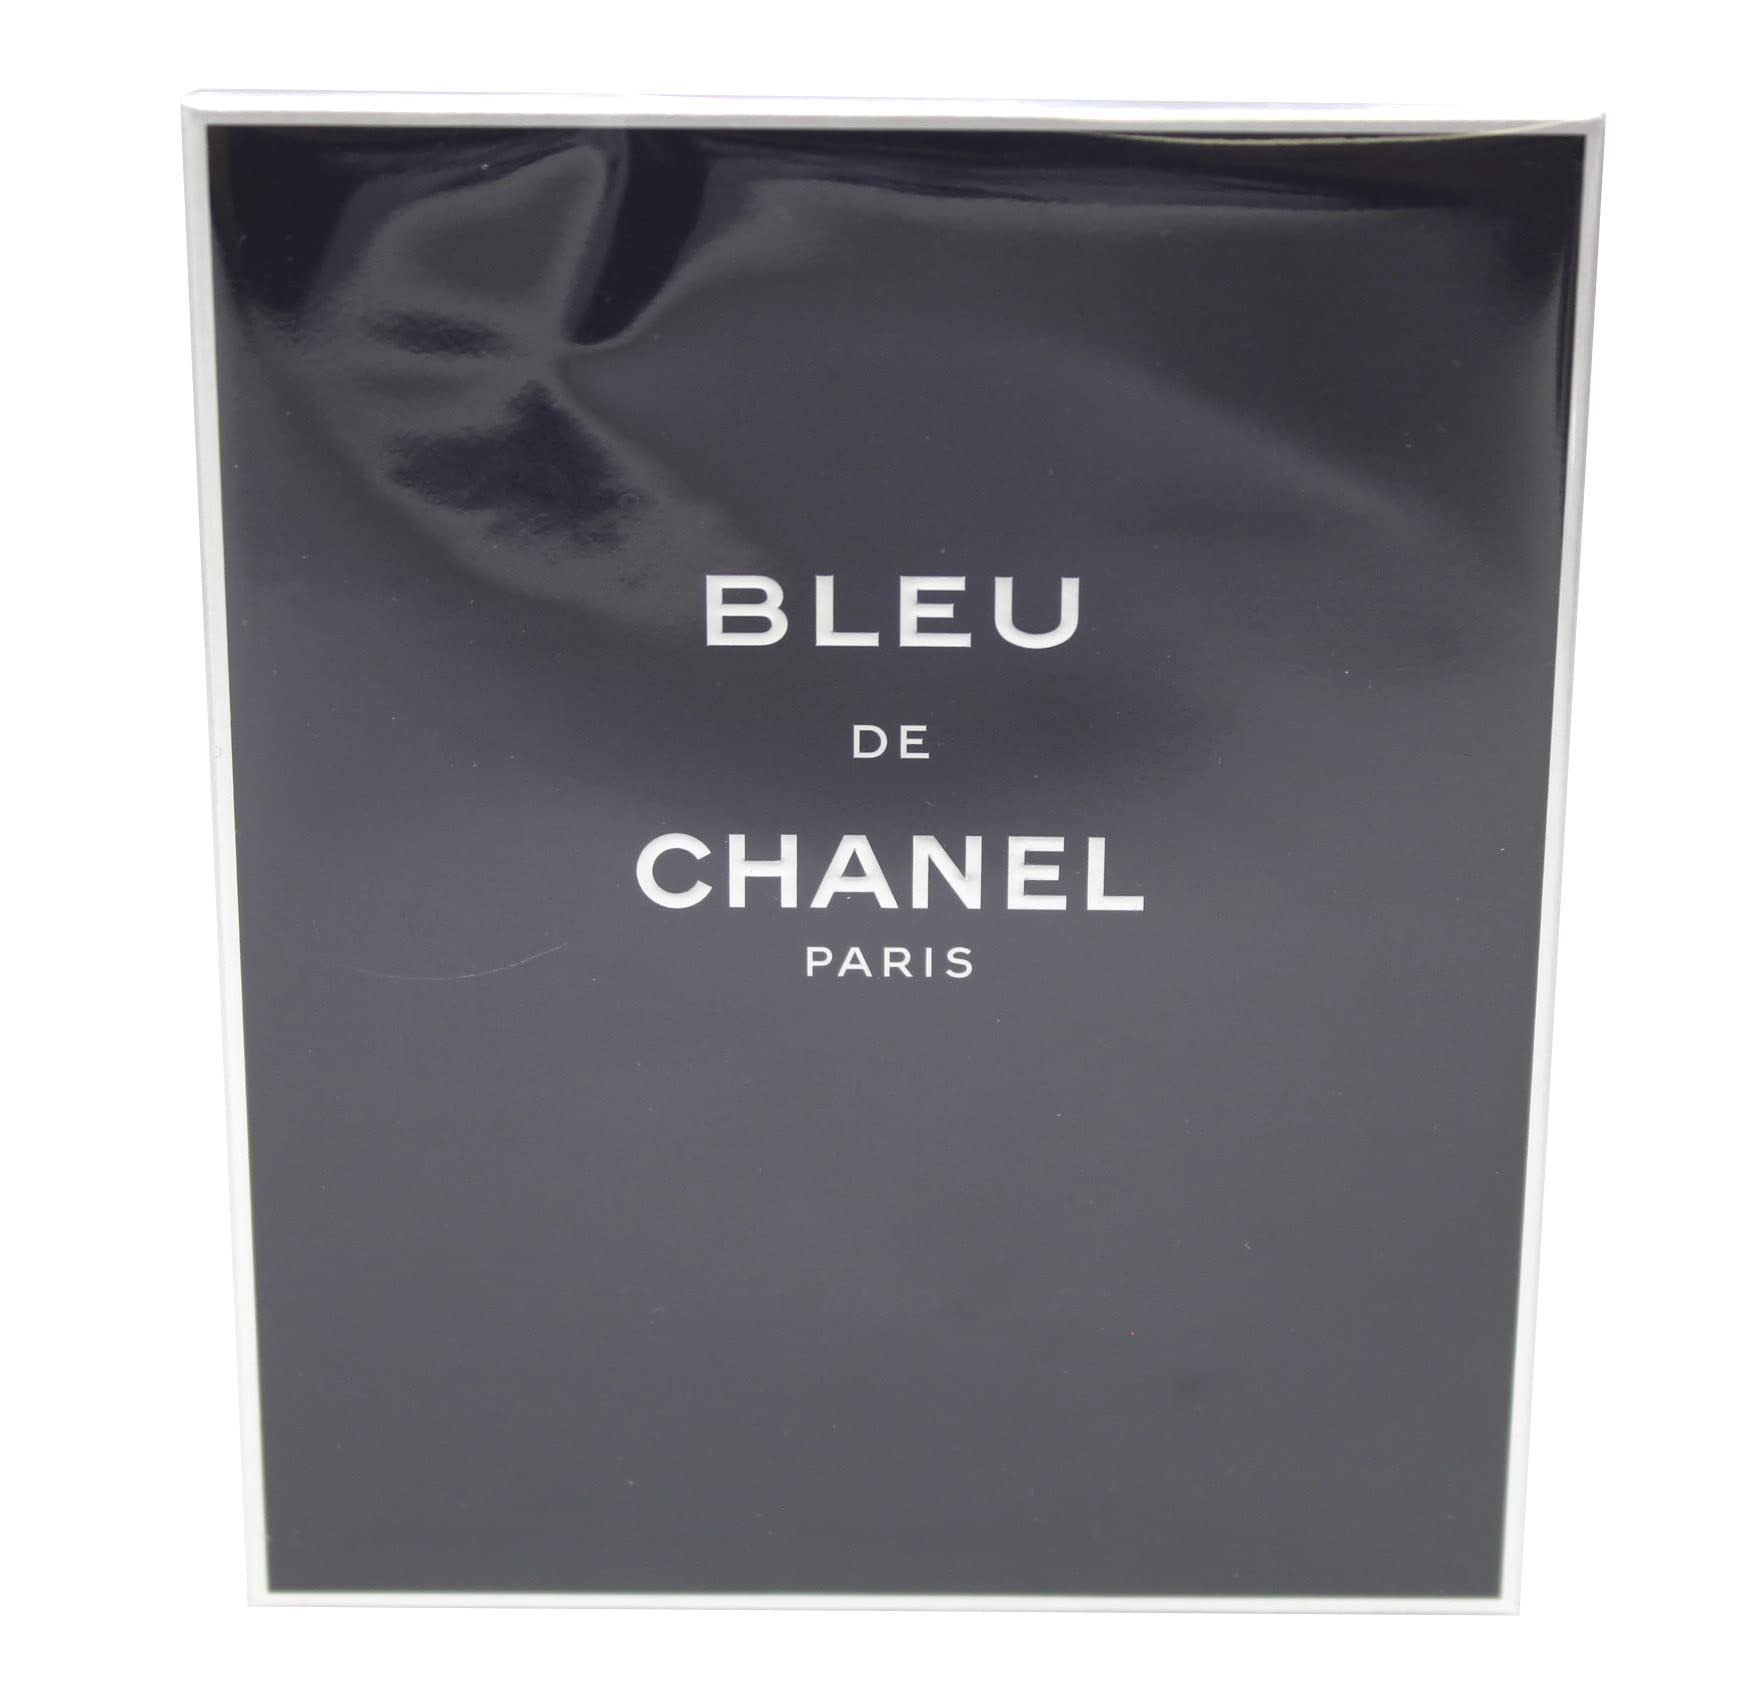 Chanel Bleu De Chanel Edt Travel Spray Refill 3pcs x 20ml  Ichiban  Perfumes  Cosmetics